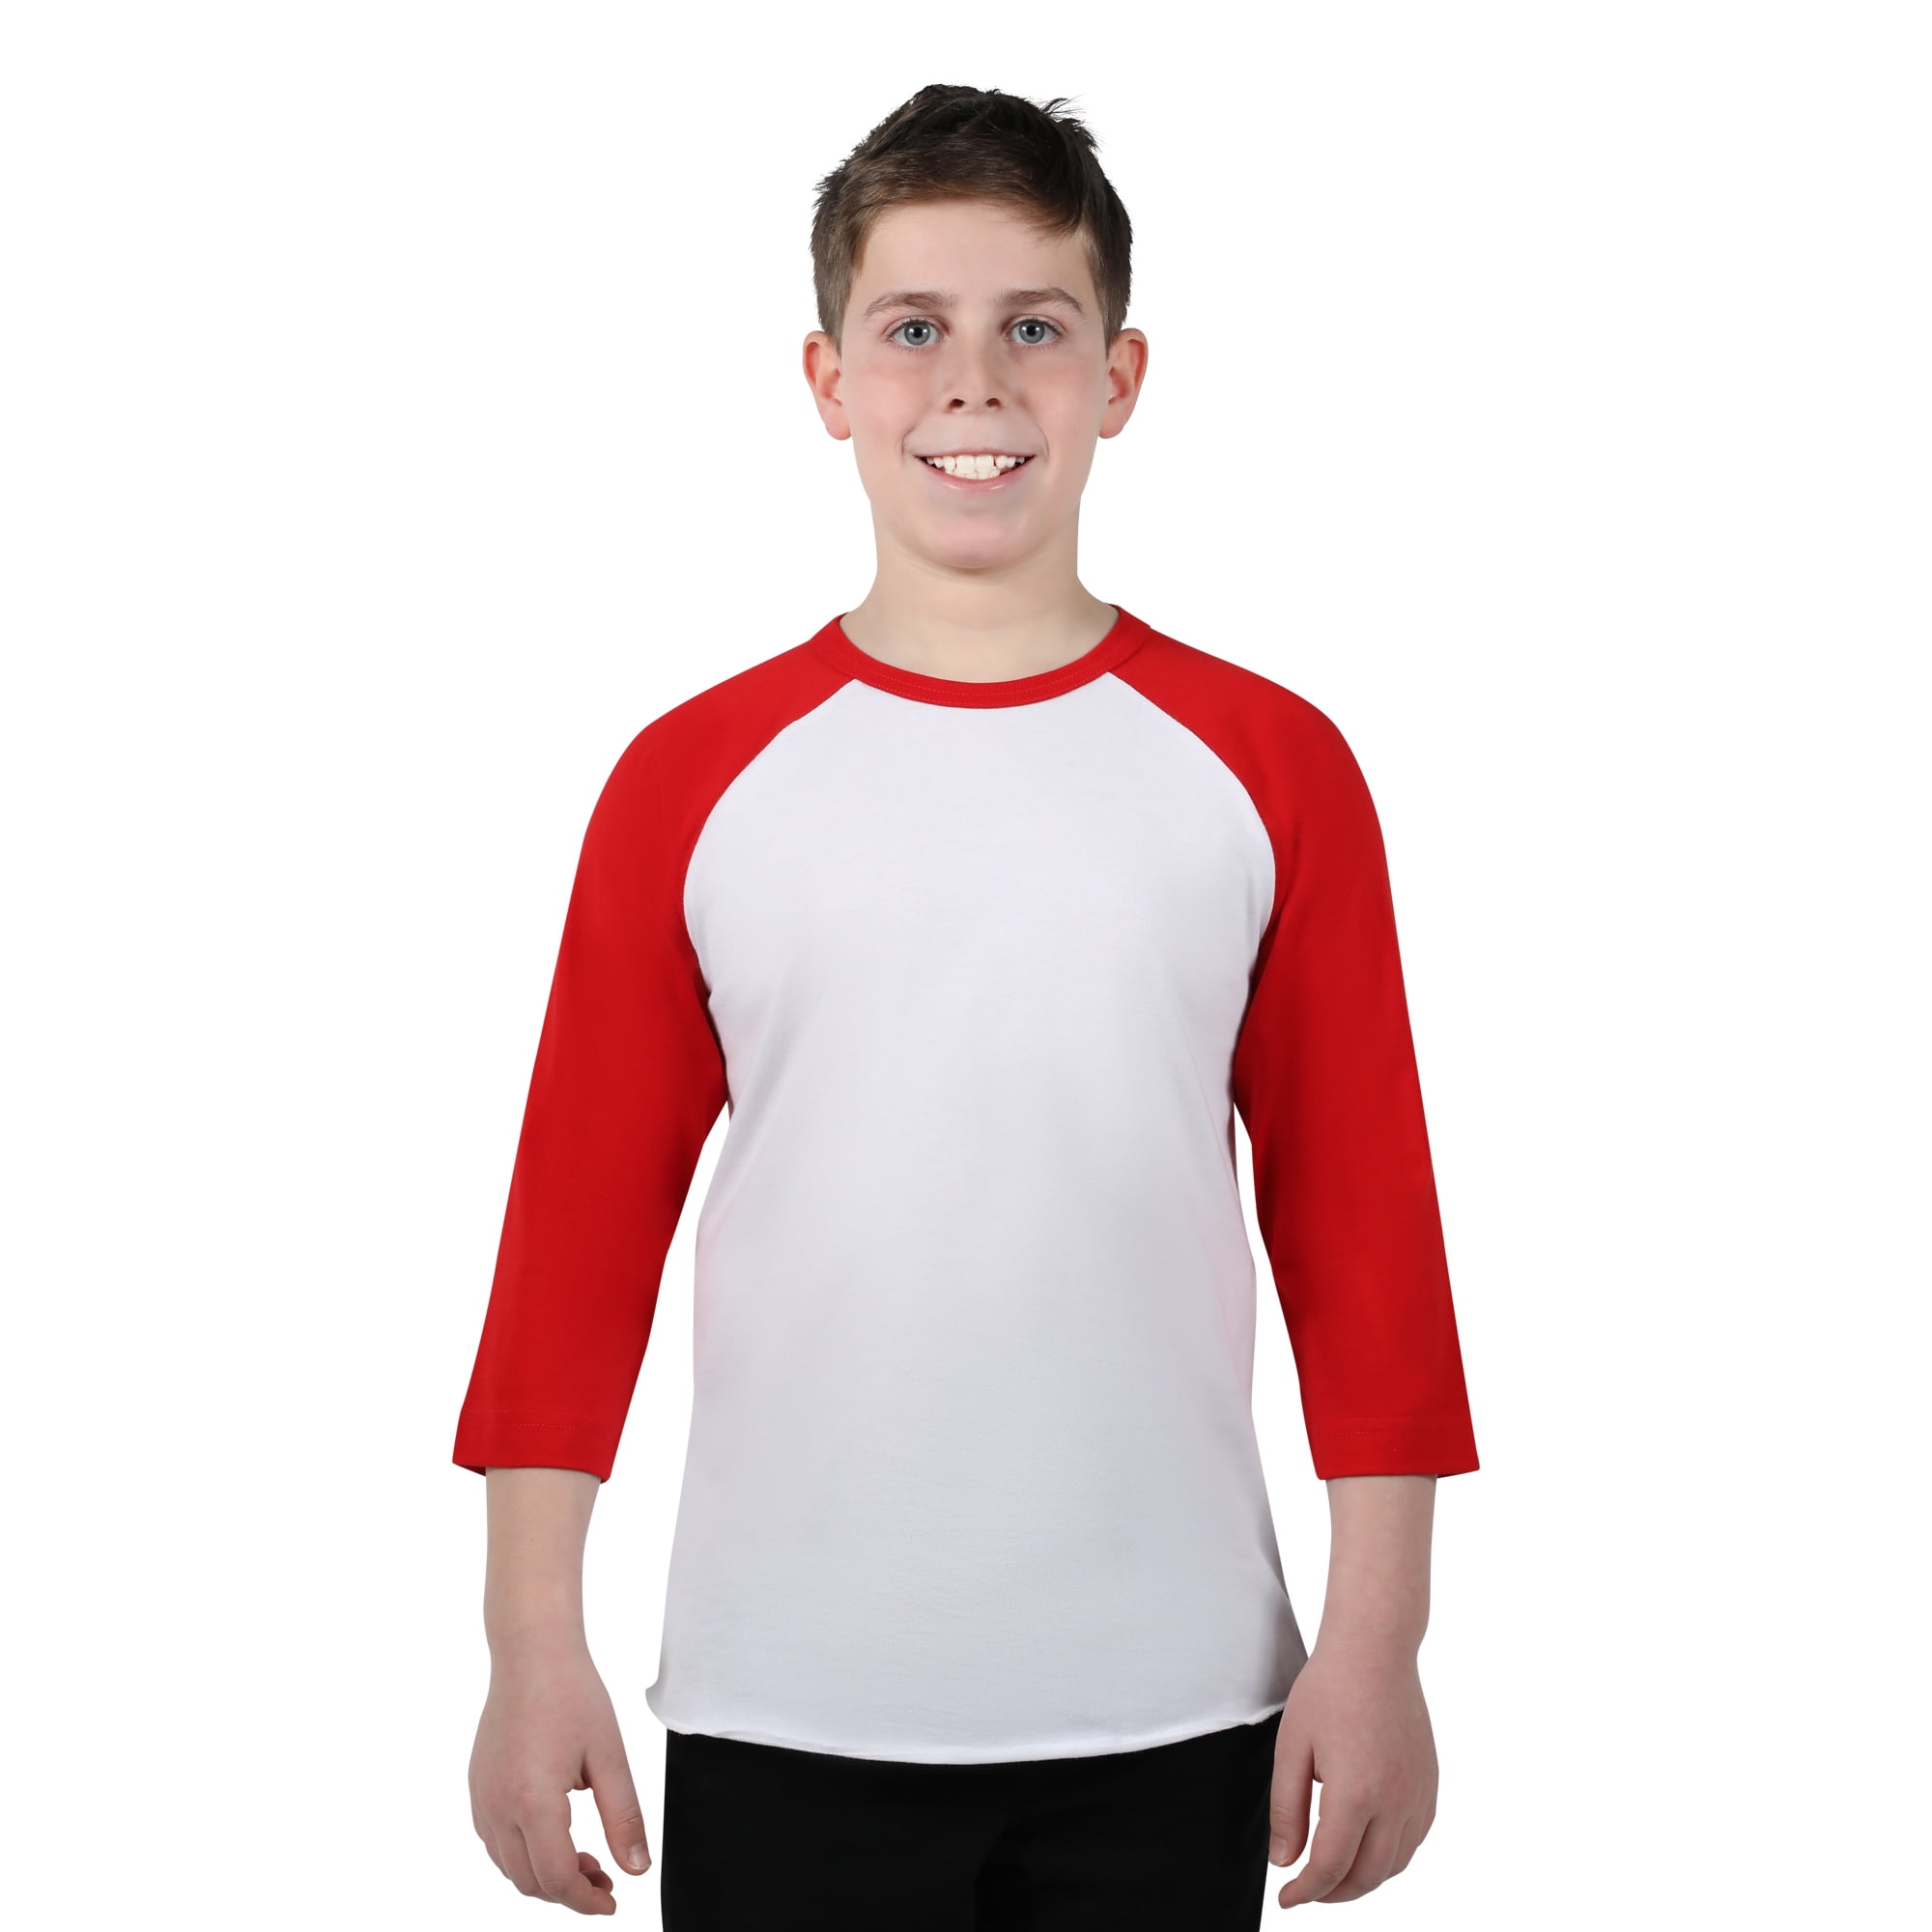 athletic-works-youth-3-4-sleeve-baseball-tee-shirt-walmart